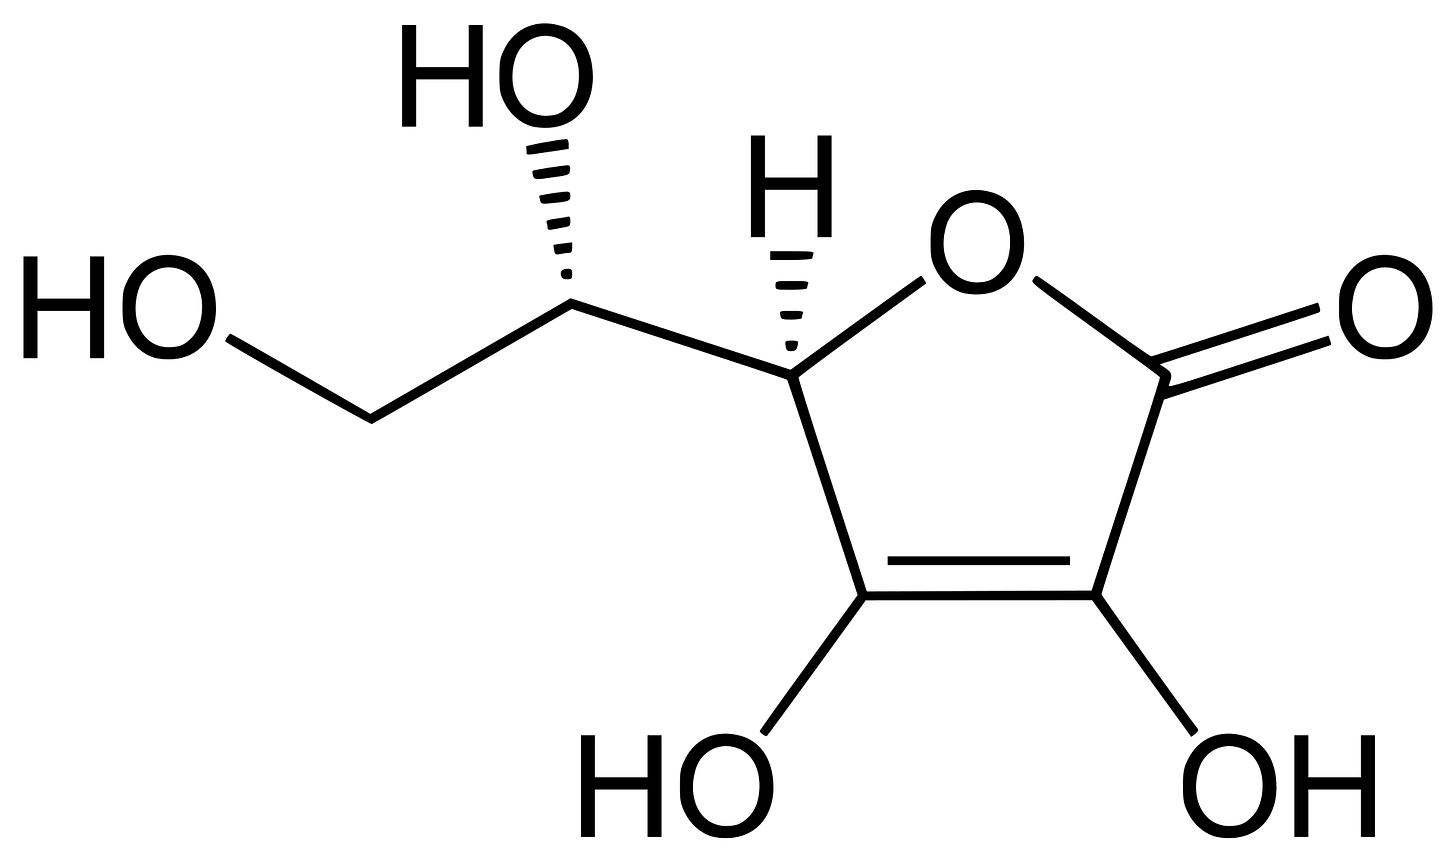 Natta projection of structural formula for L-ascorbic acid